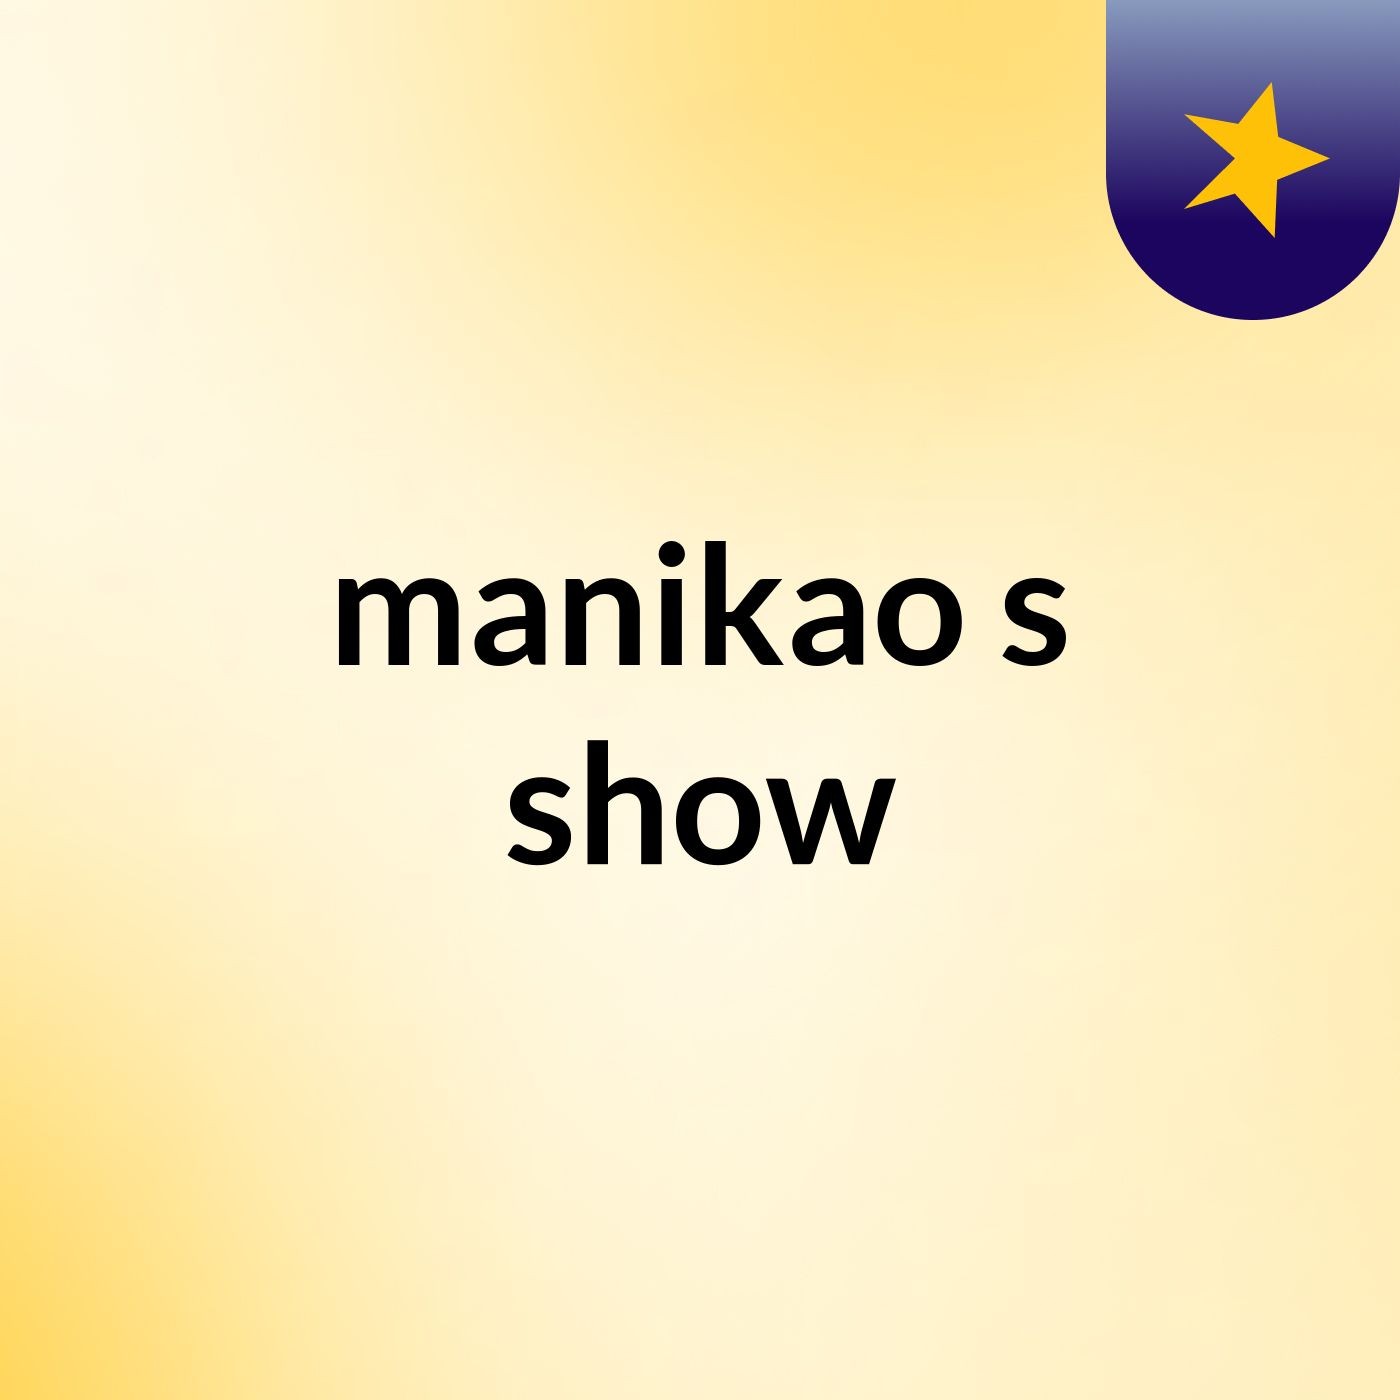 manikao's show